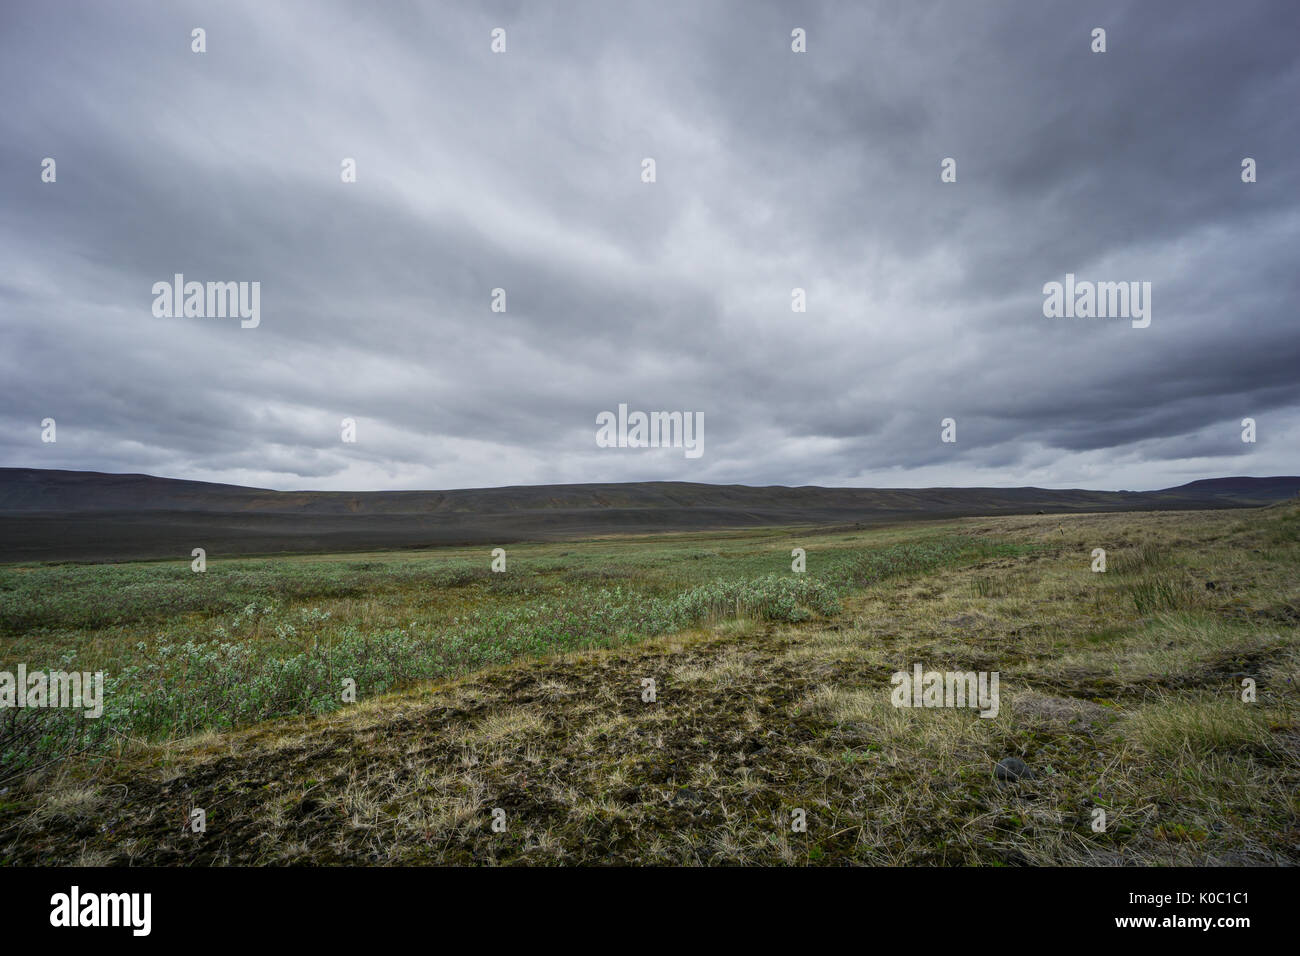 Island - Dunkle Atmosphäre an einsame flache Landschaft vulkanischen Ursprungs Stockfoto